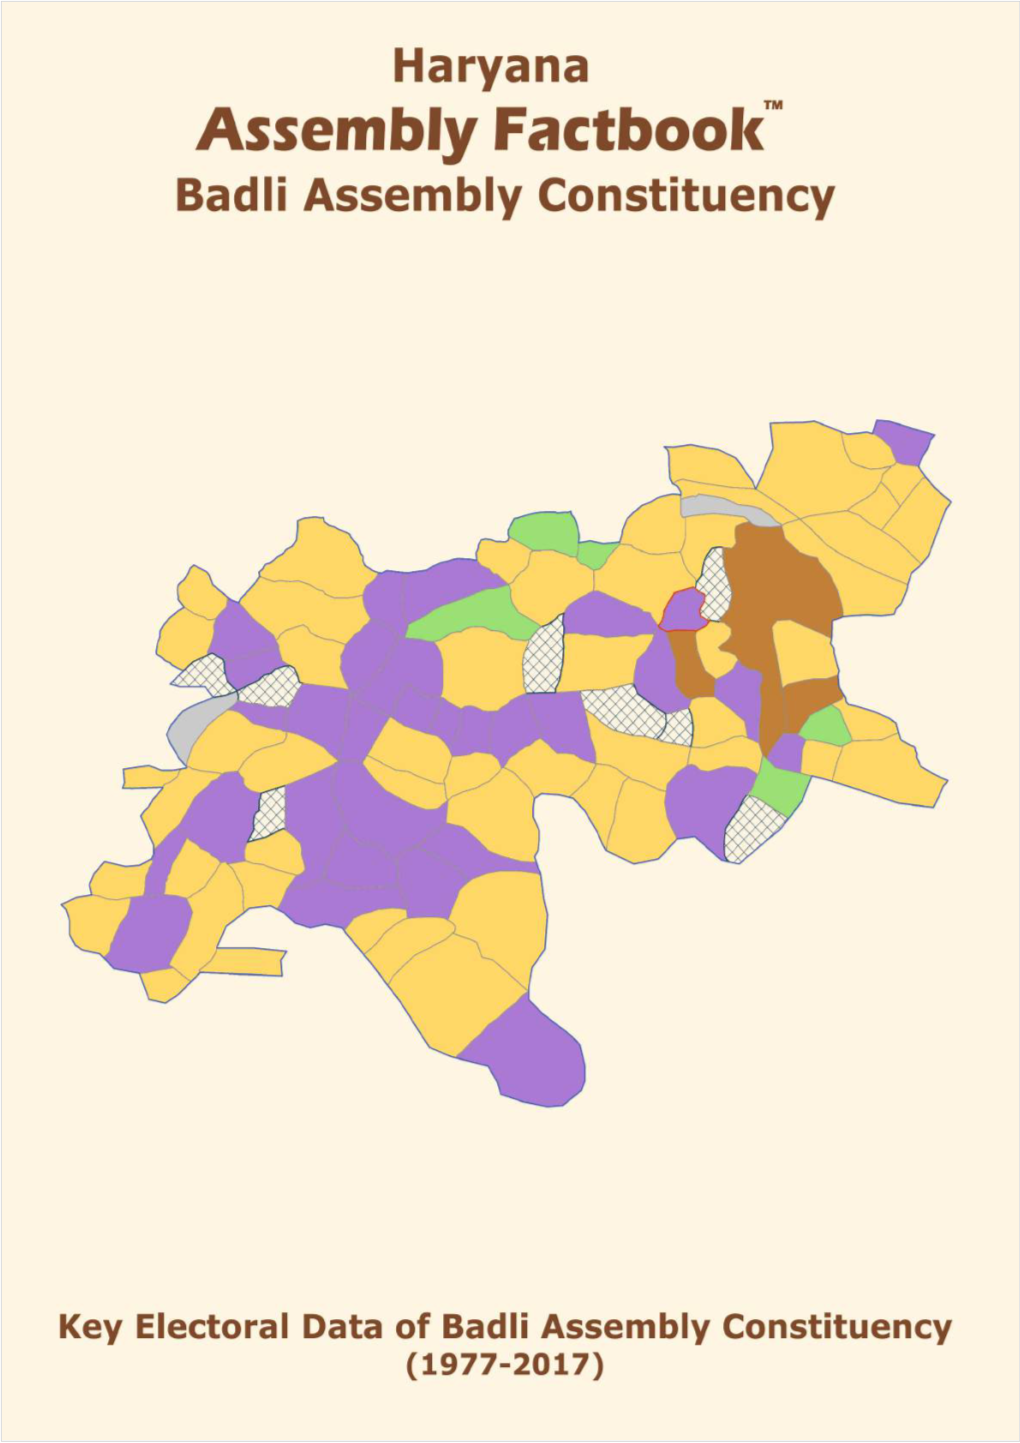 Badli Assembly Haryana Factbook